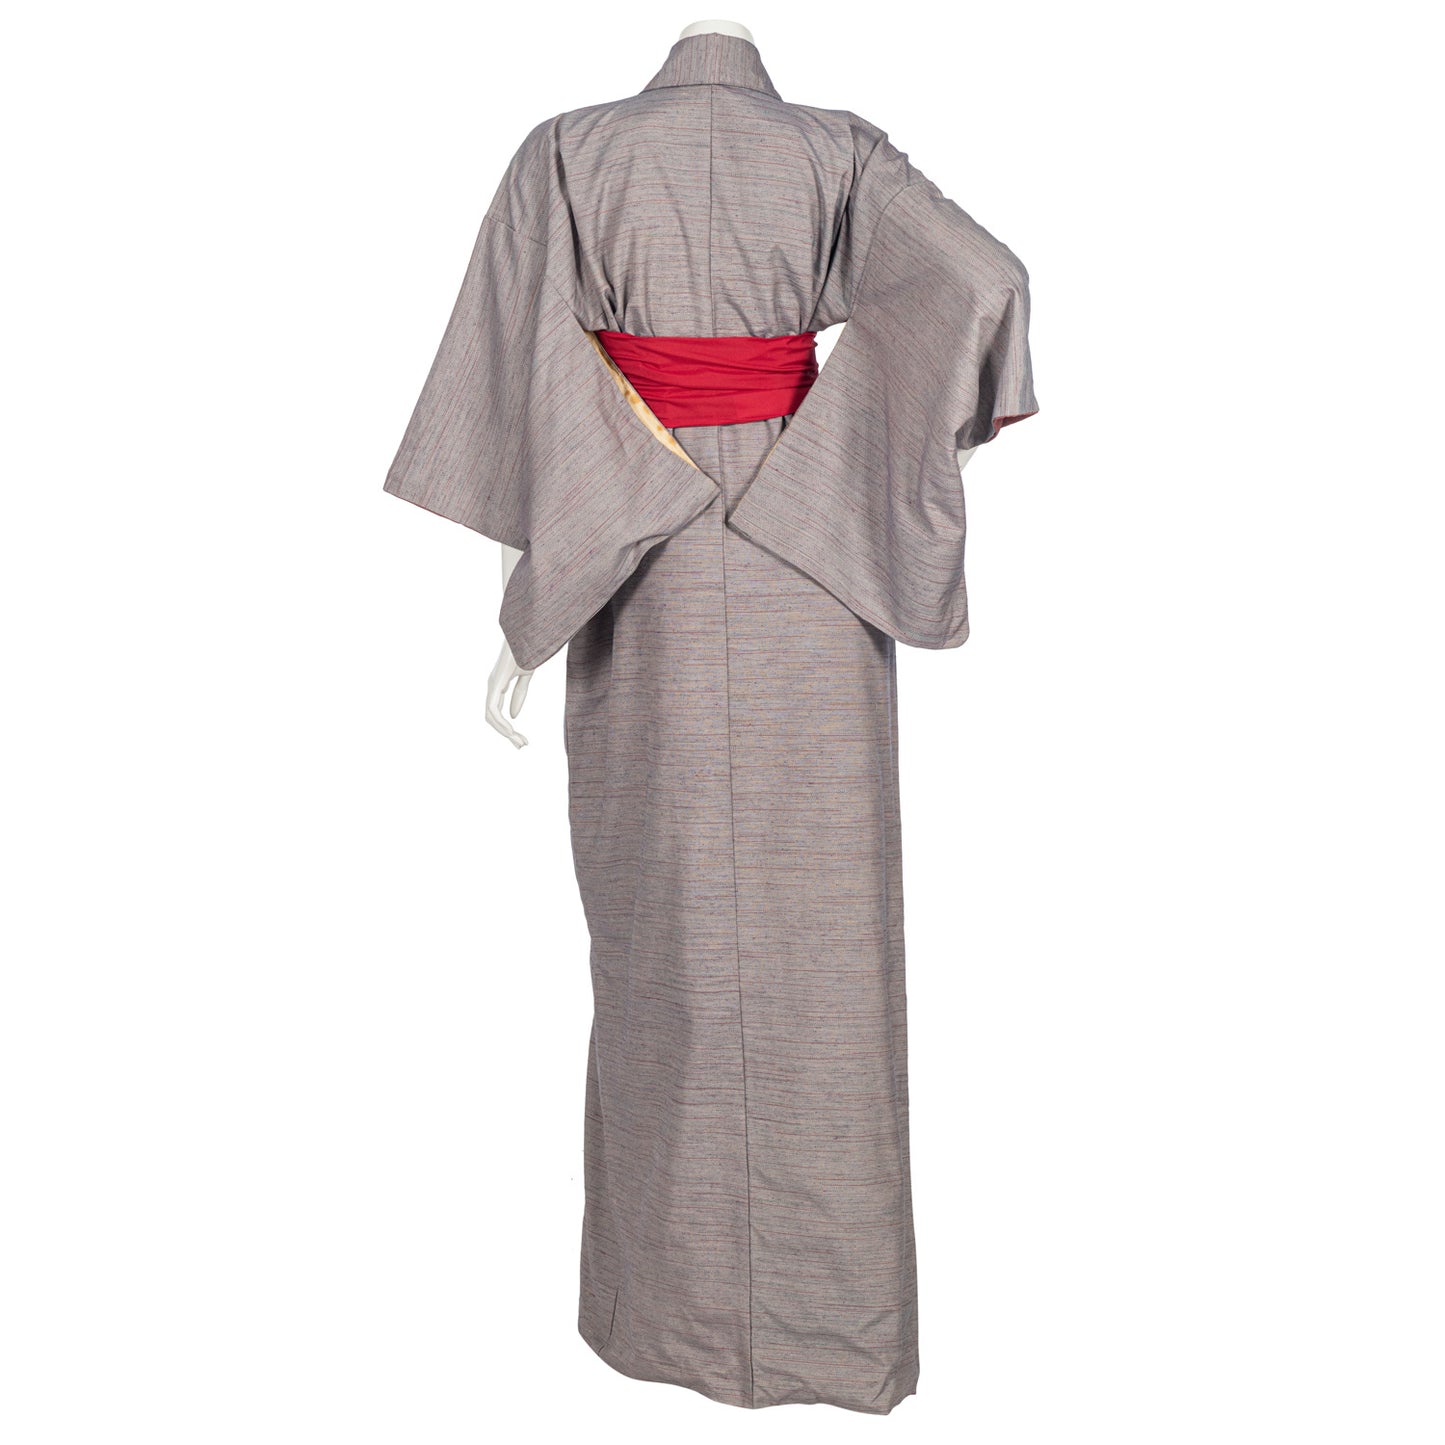 Ochiyo Vintage Japanese Kimono Robe